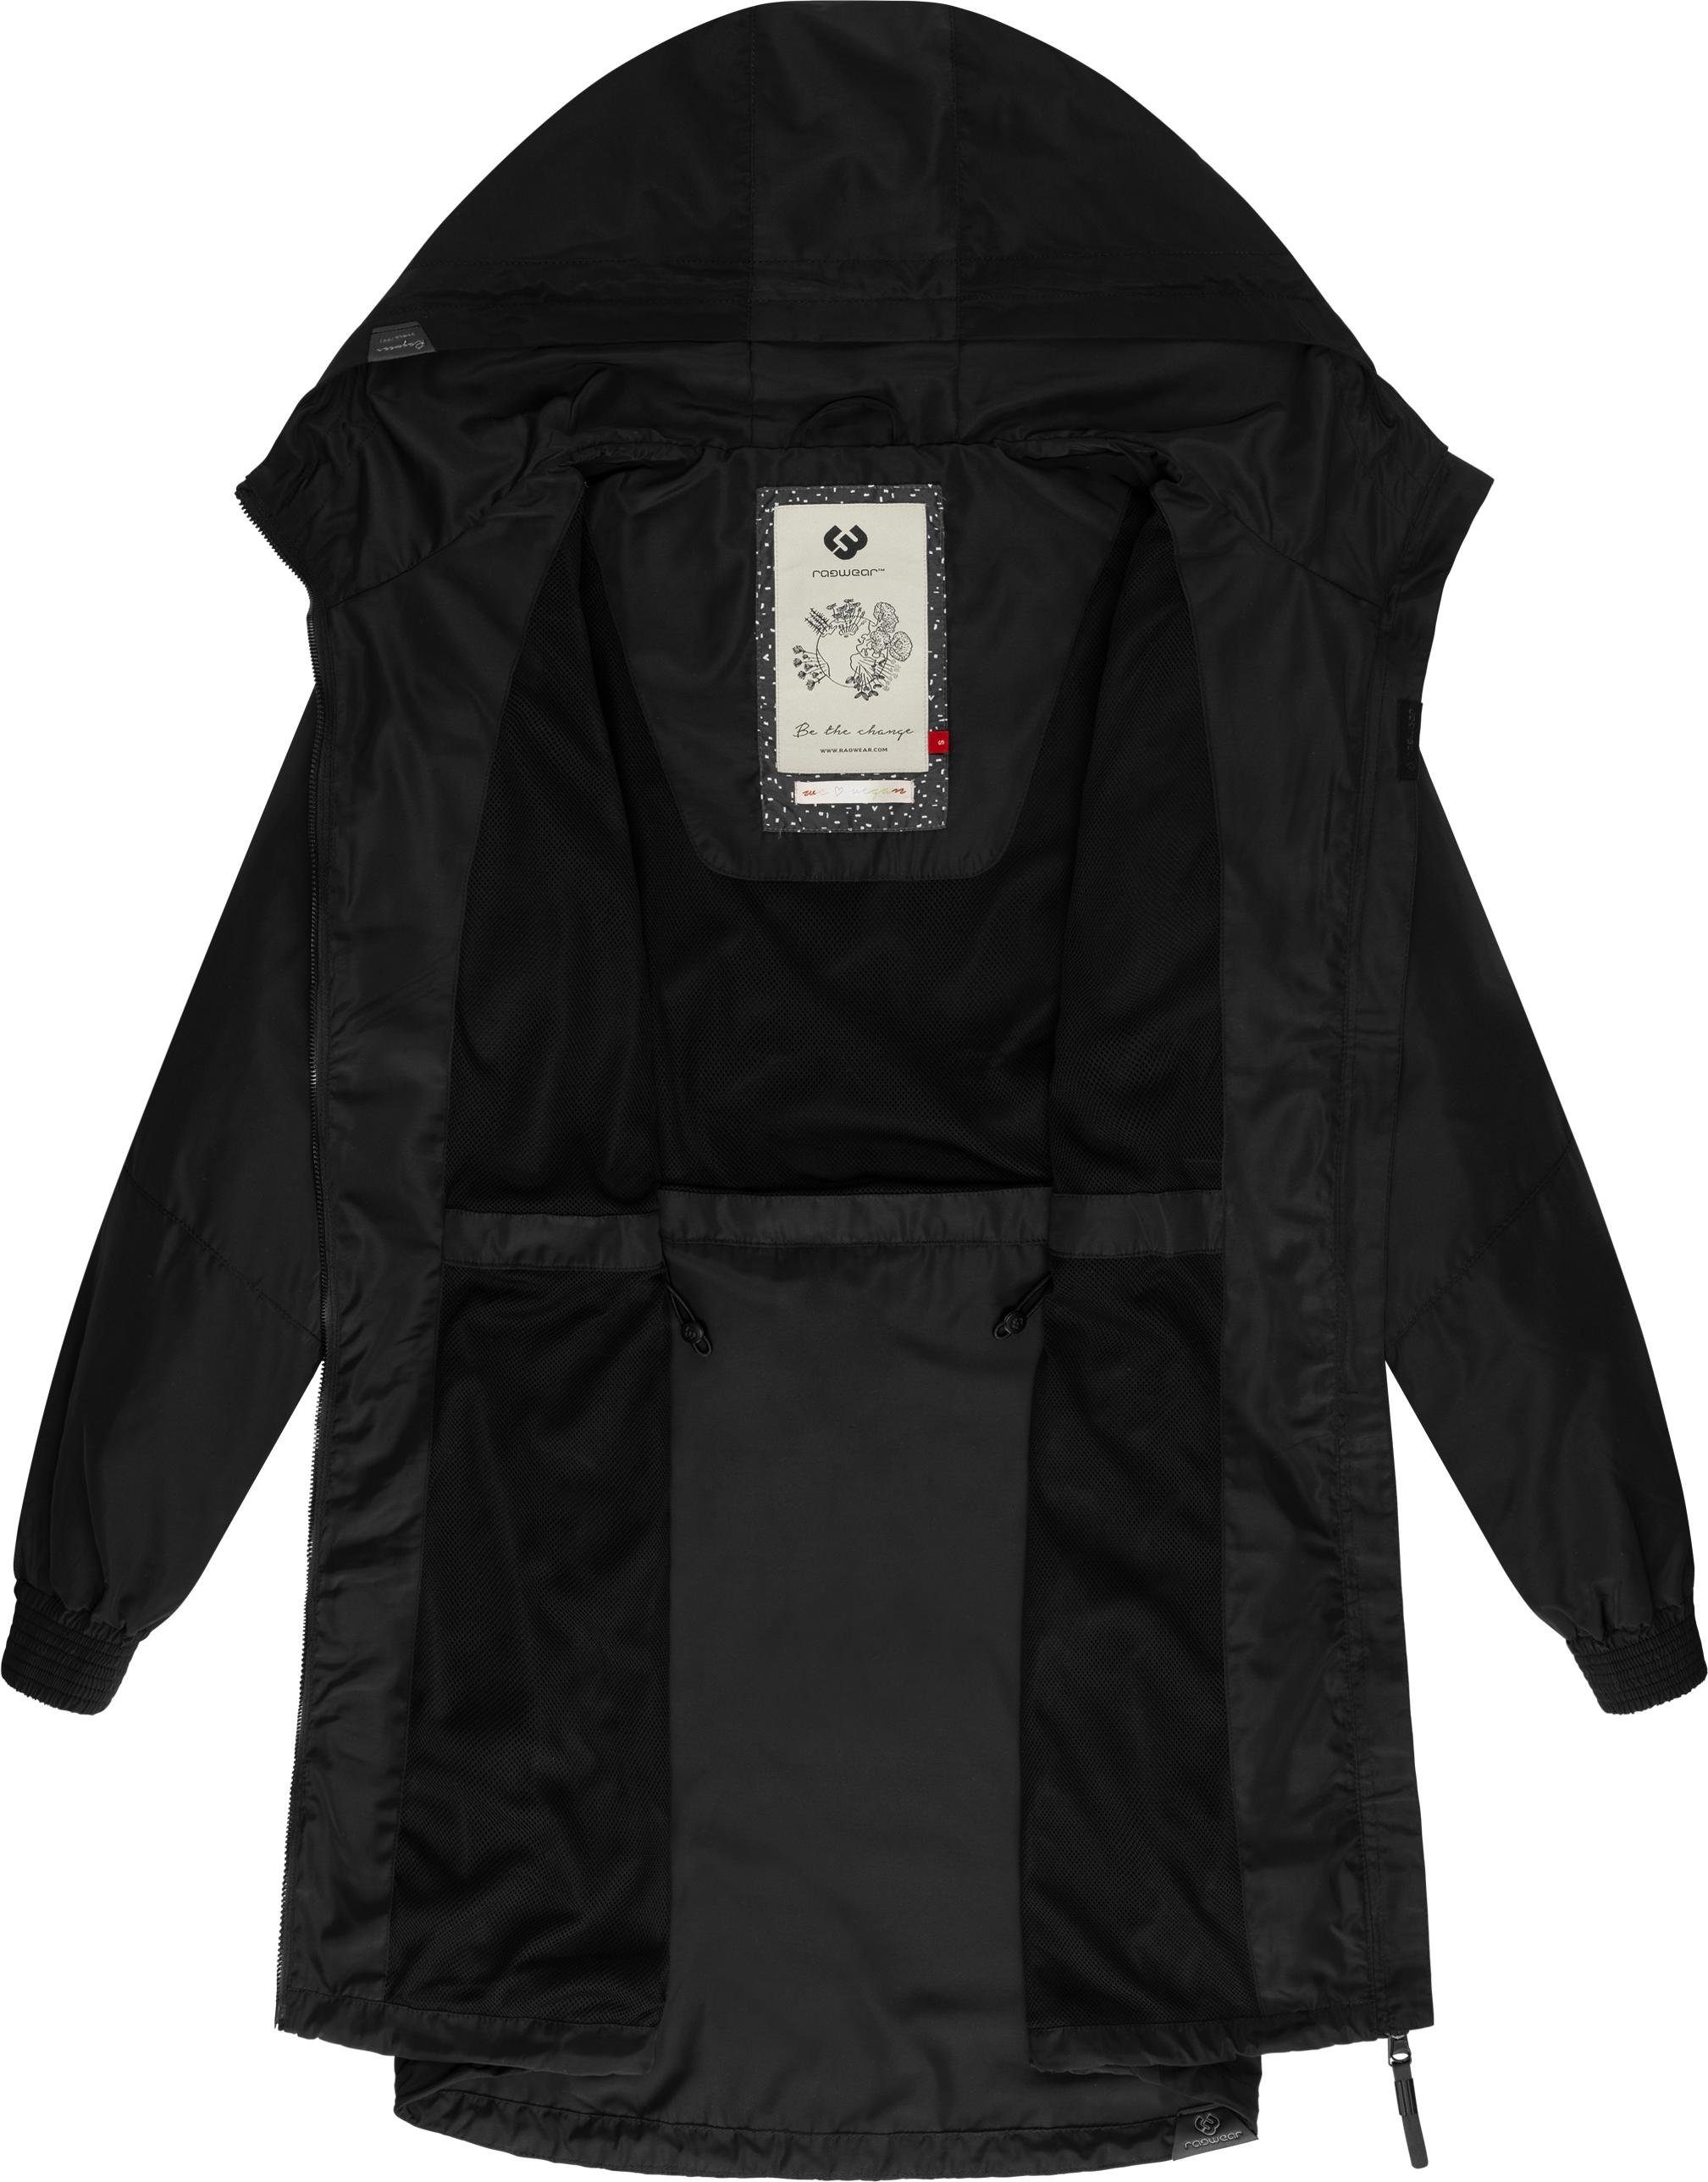 Outdoorjacke Bronja stylischer Übergangsmantel schwarz Ragwear unifarbener